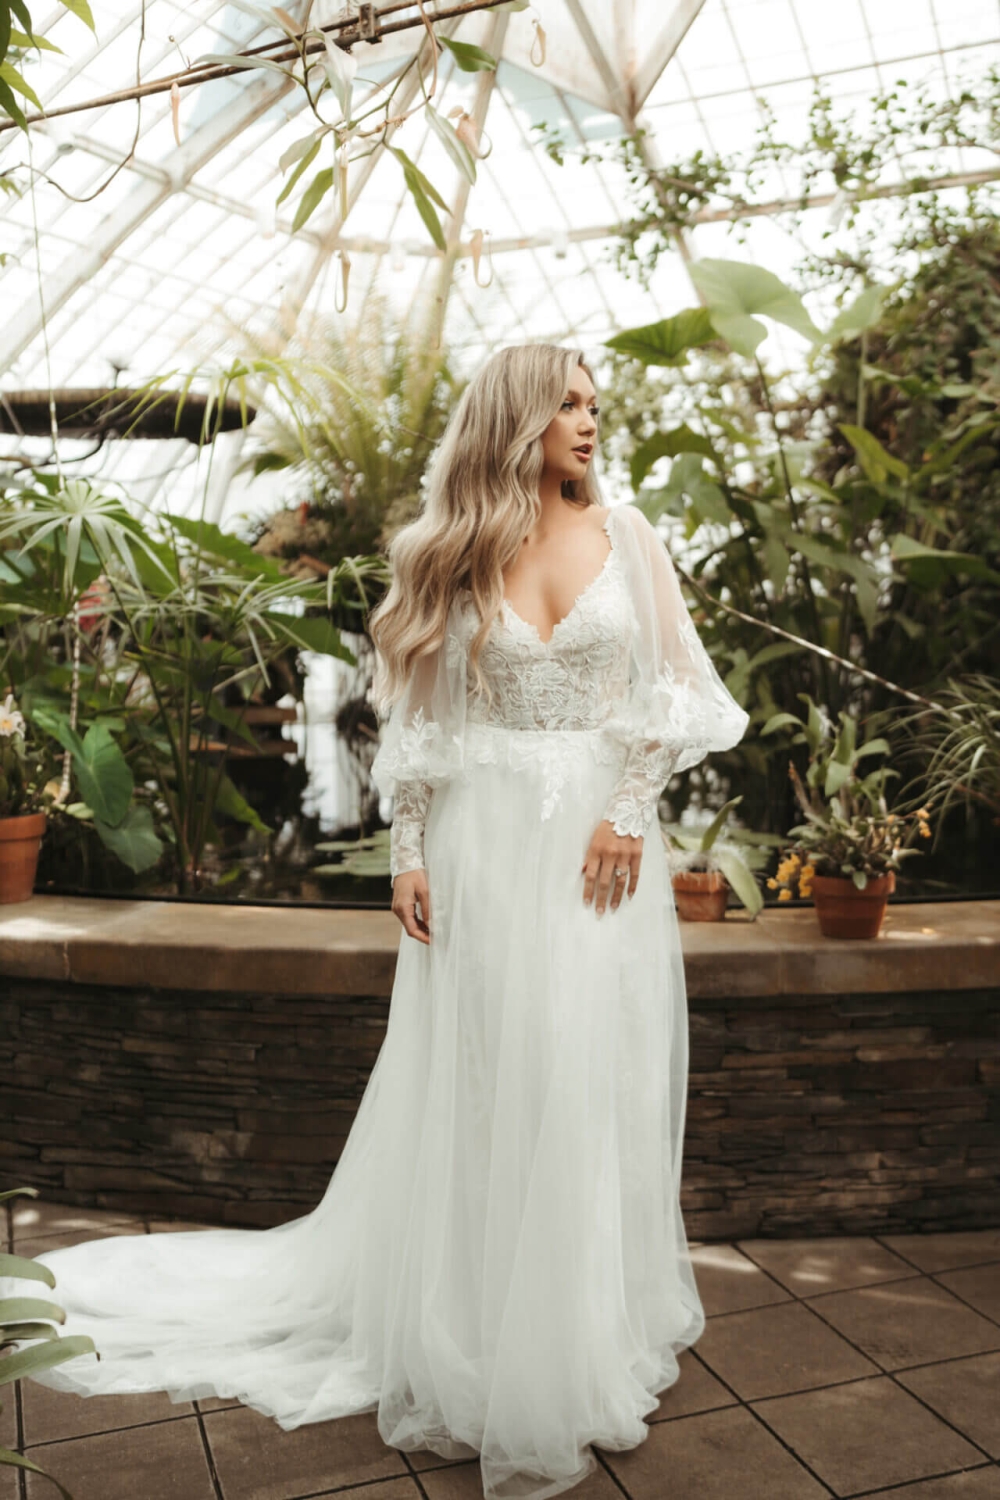 Plus Size Wedding Gowns | GSB | Bridal Shop West Midlands